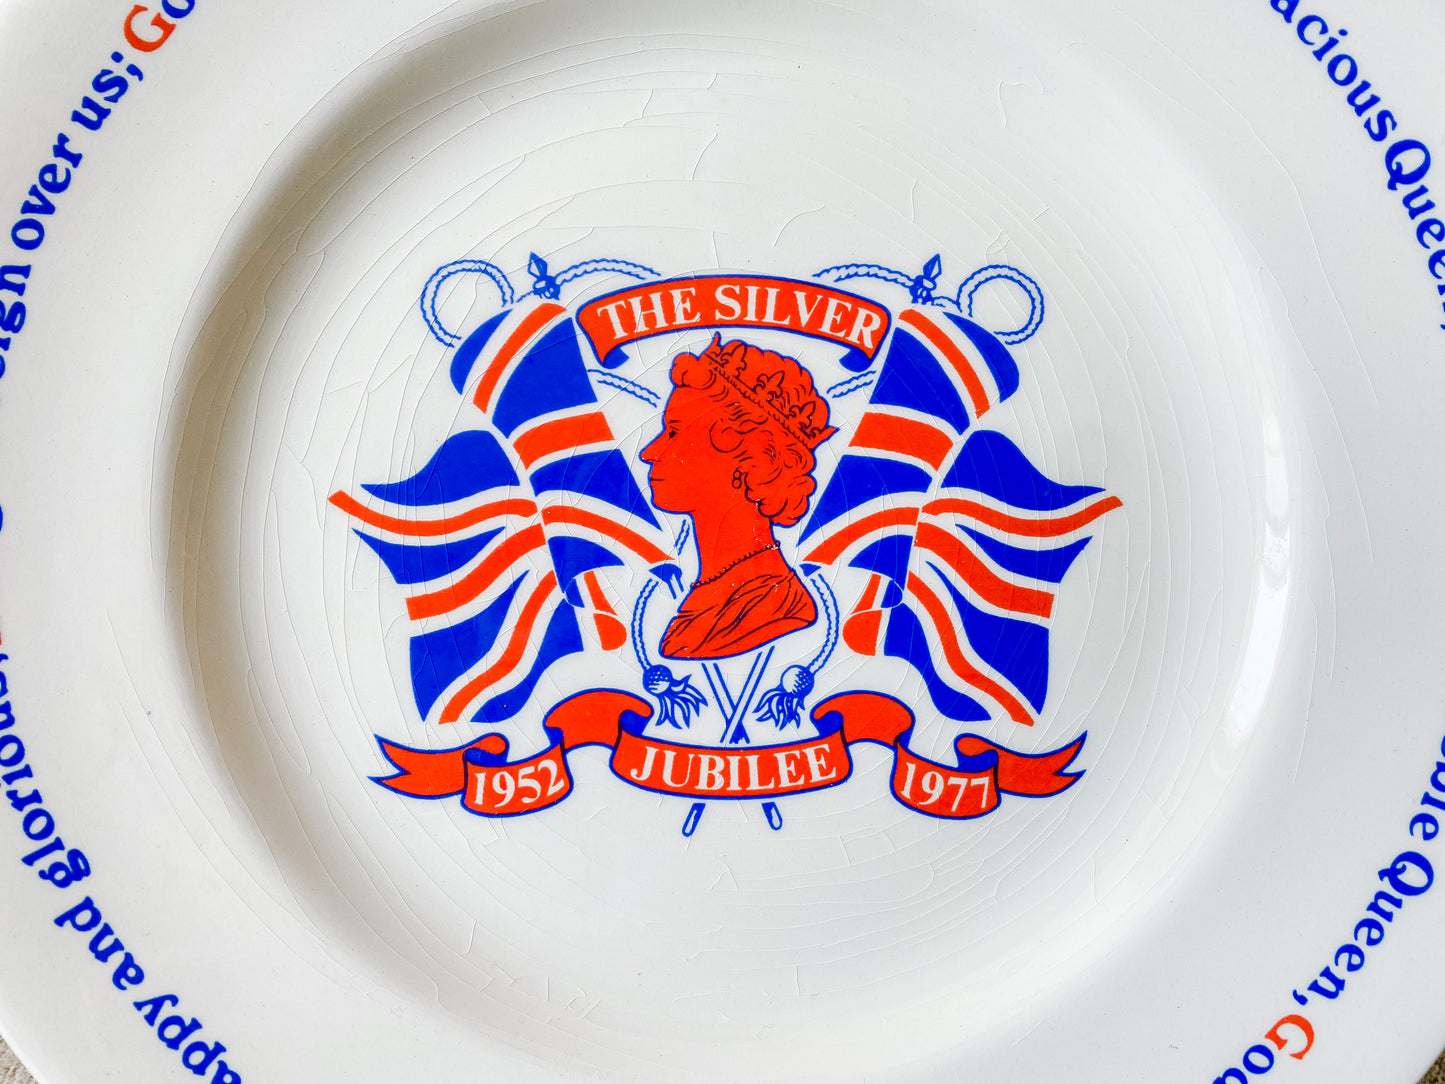 Vintage Queen Elizabeth II Silver Jubilee Commemorative Plate | Red White Blue Ironstone by Adams